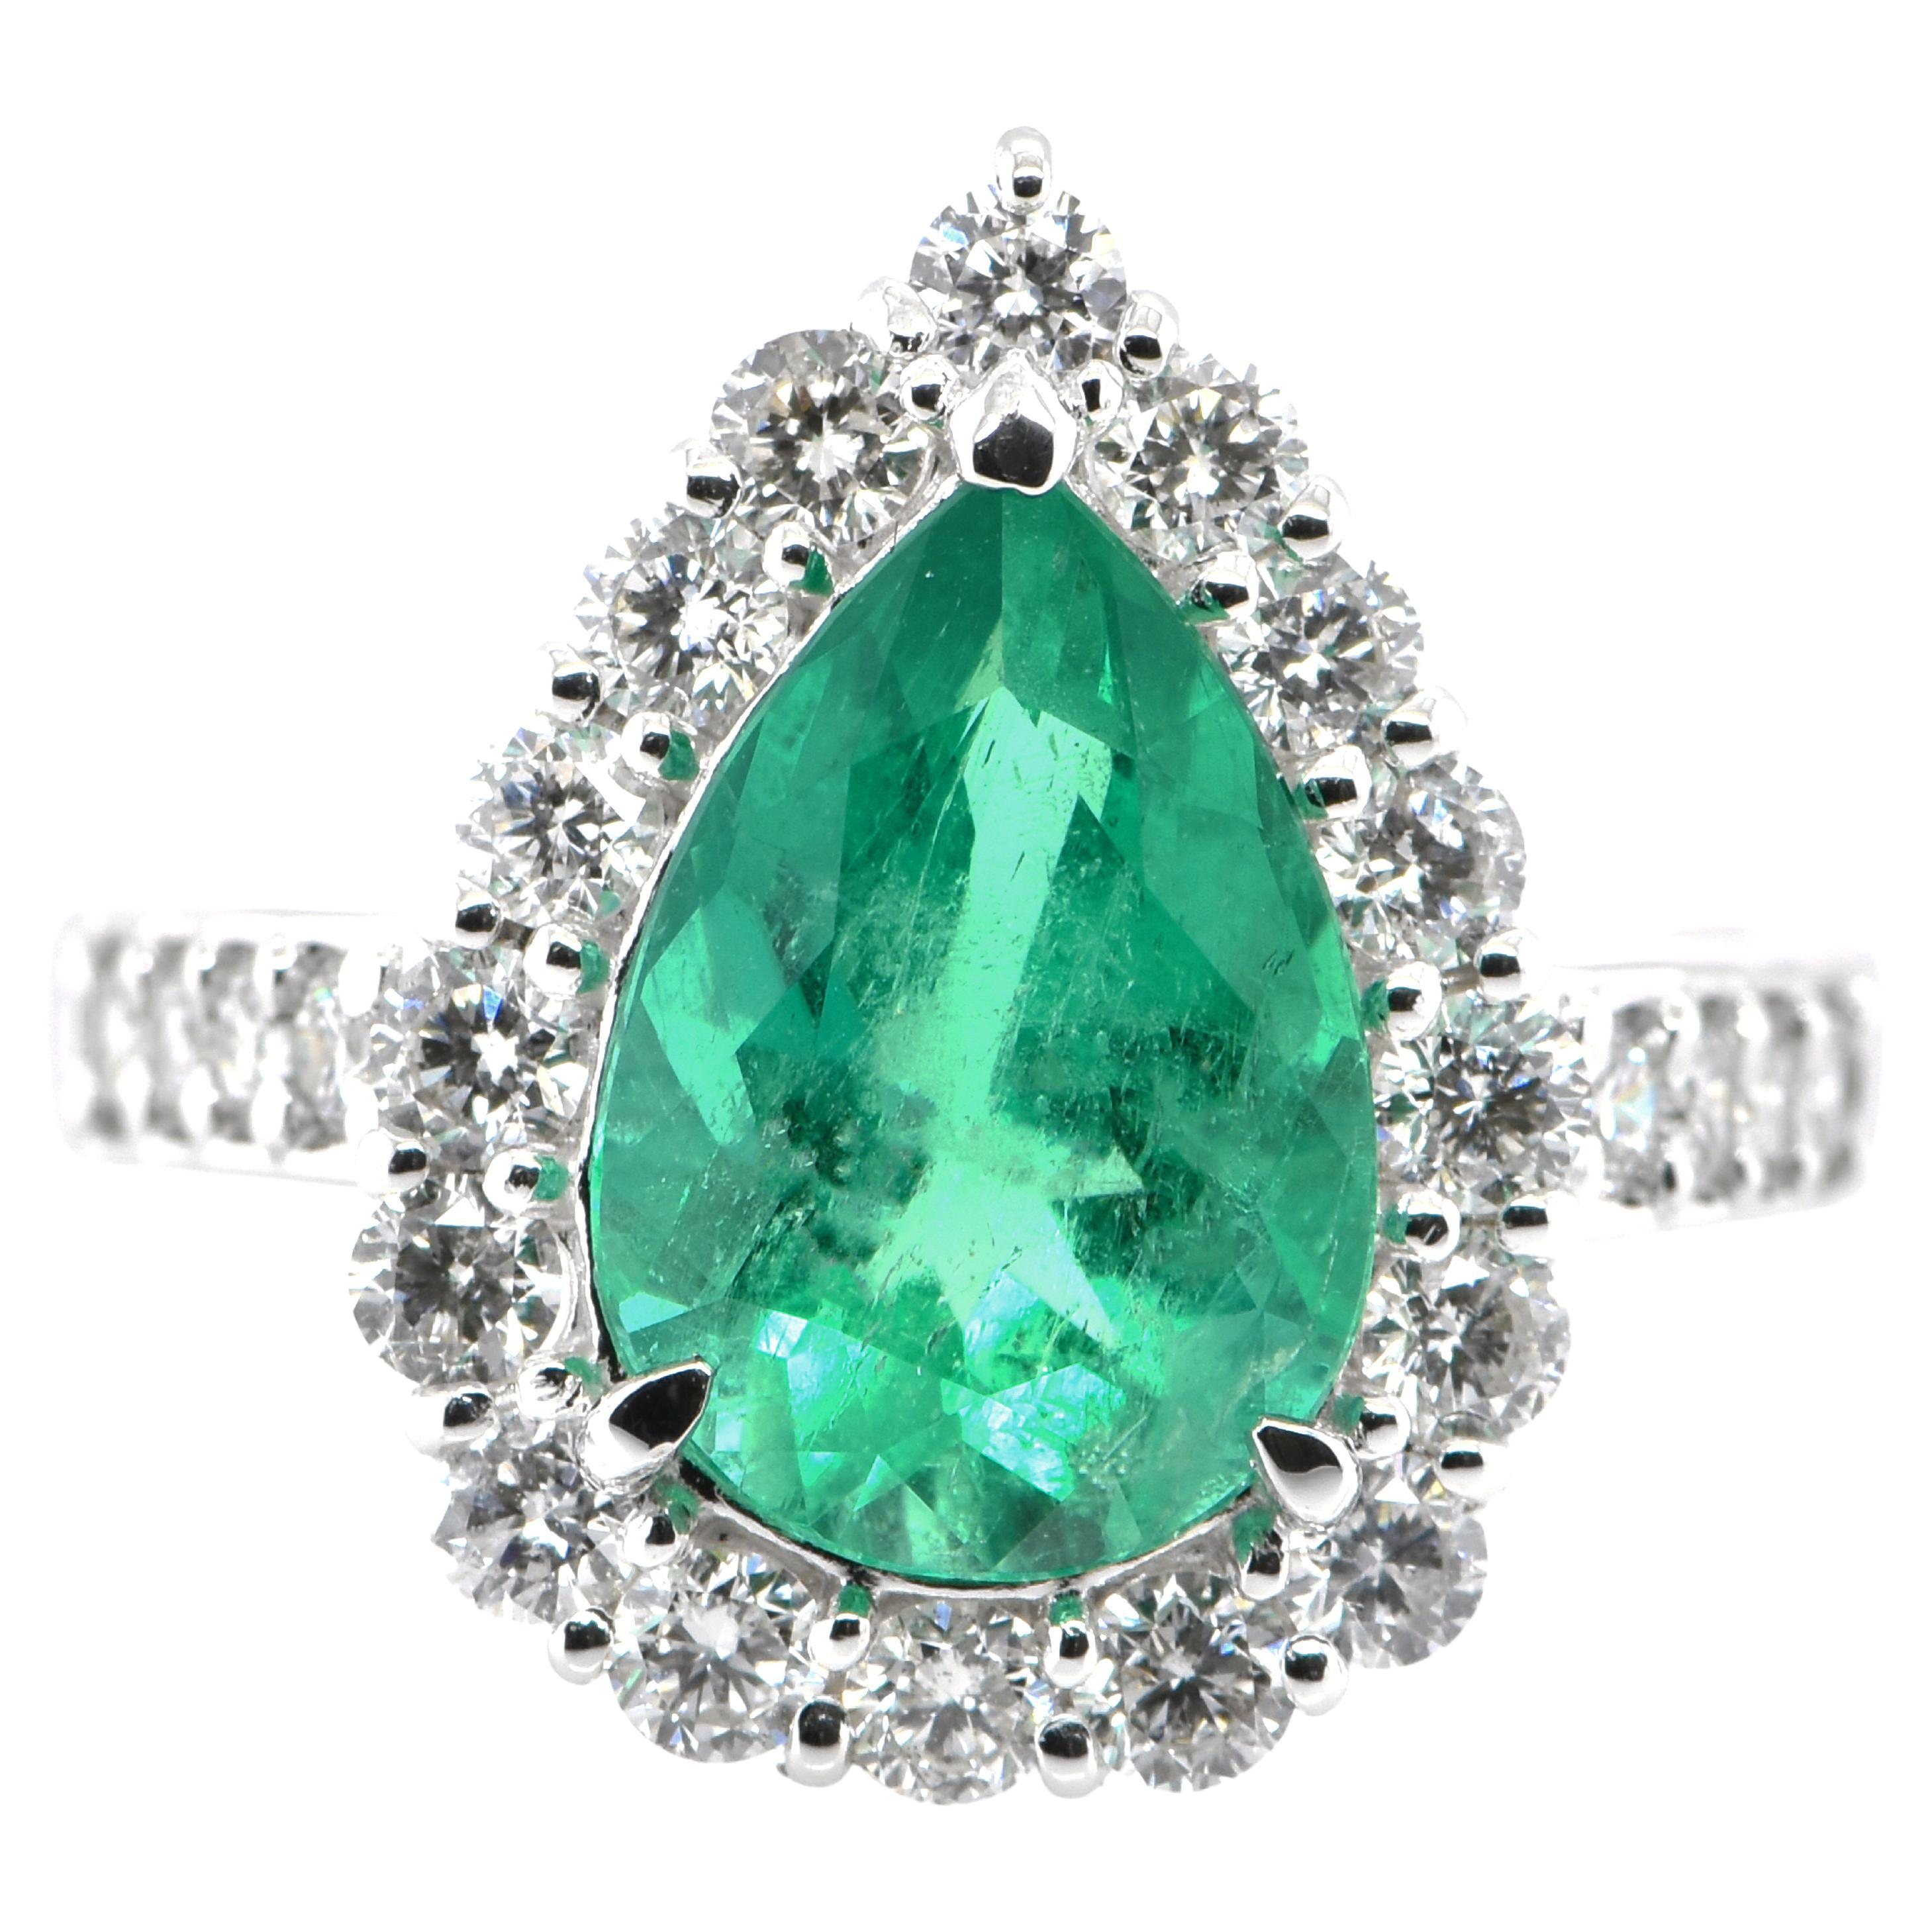 2.50 Carat Natural Pear-Cut Emerald and Diamond Ring Set in Platinum